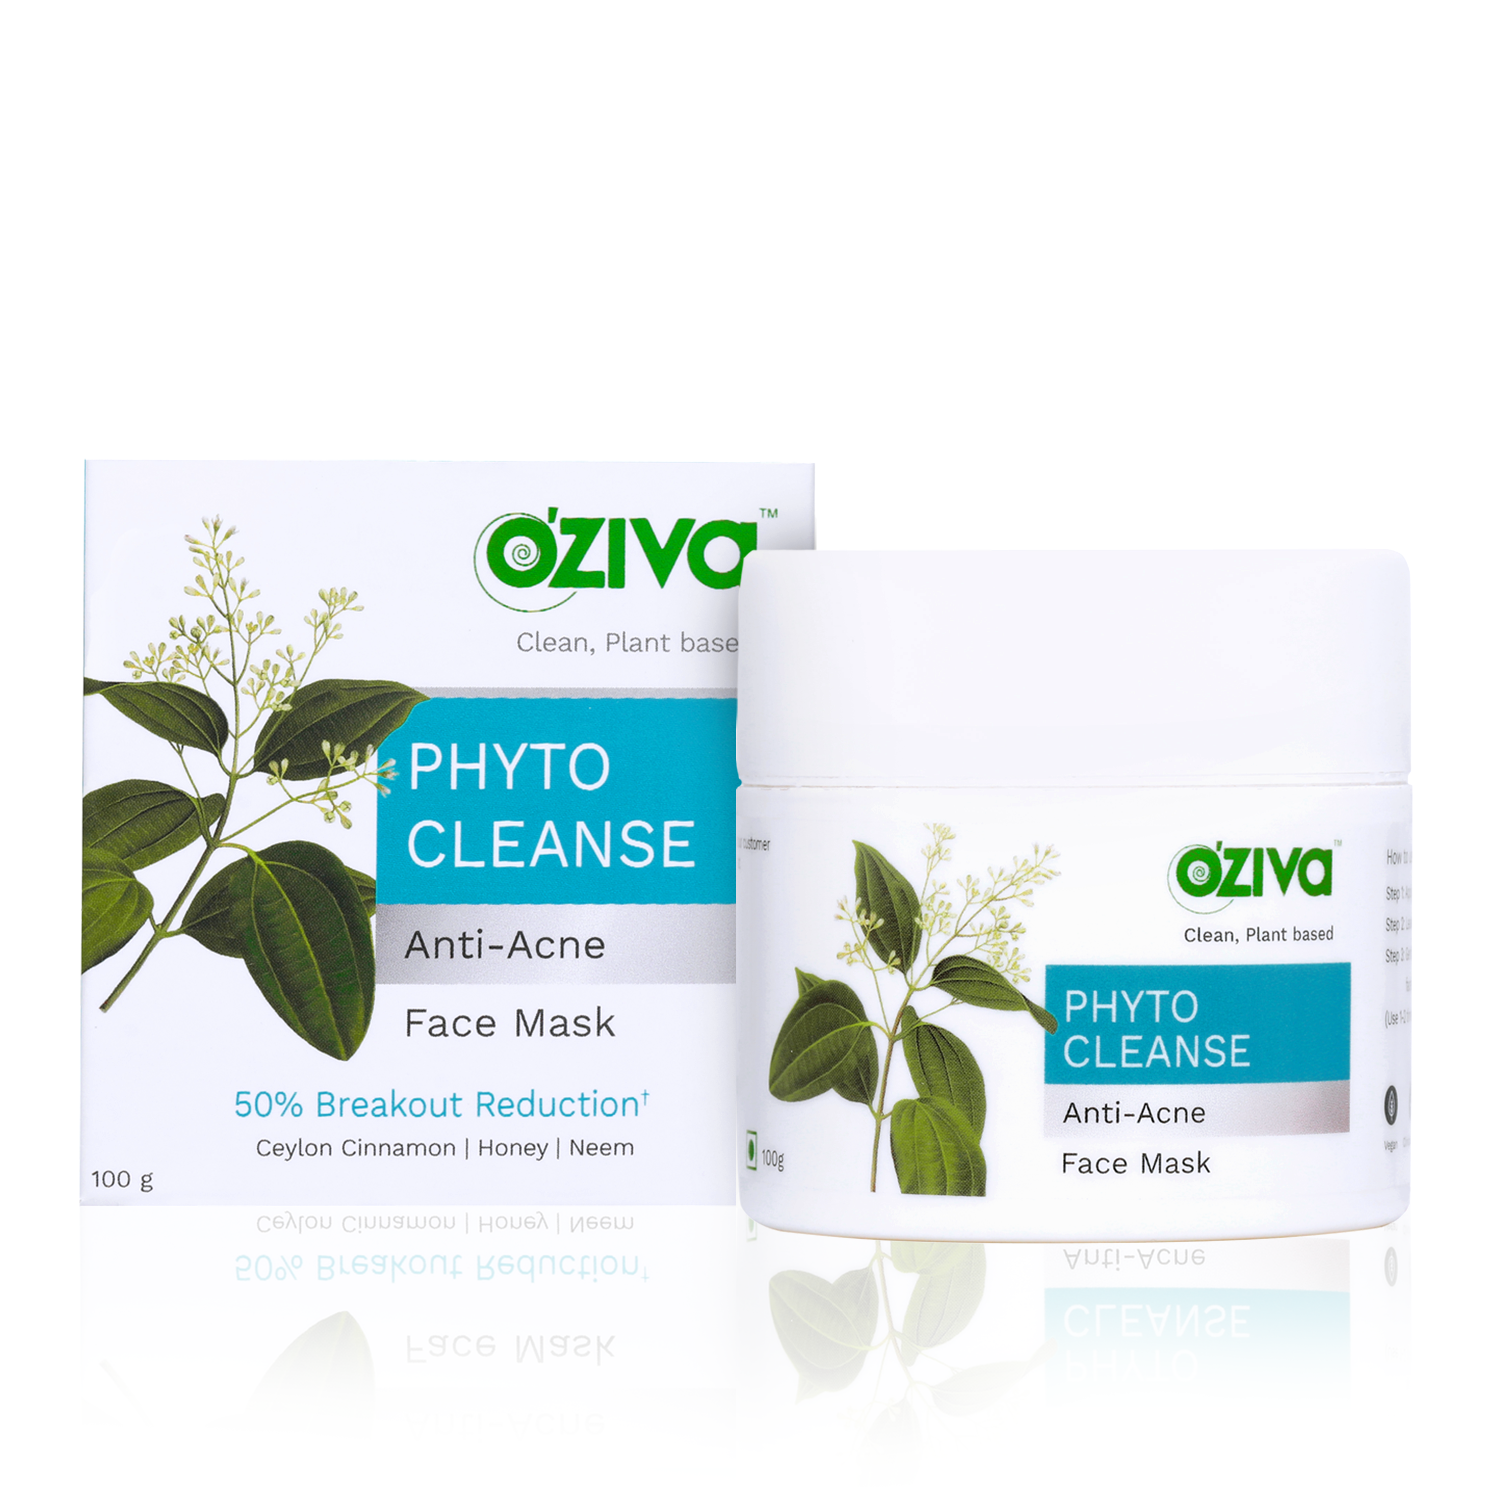 OZiva Phyto Cleanse Anti-Acne Face Mask